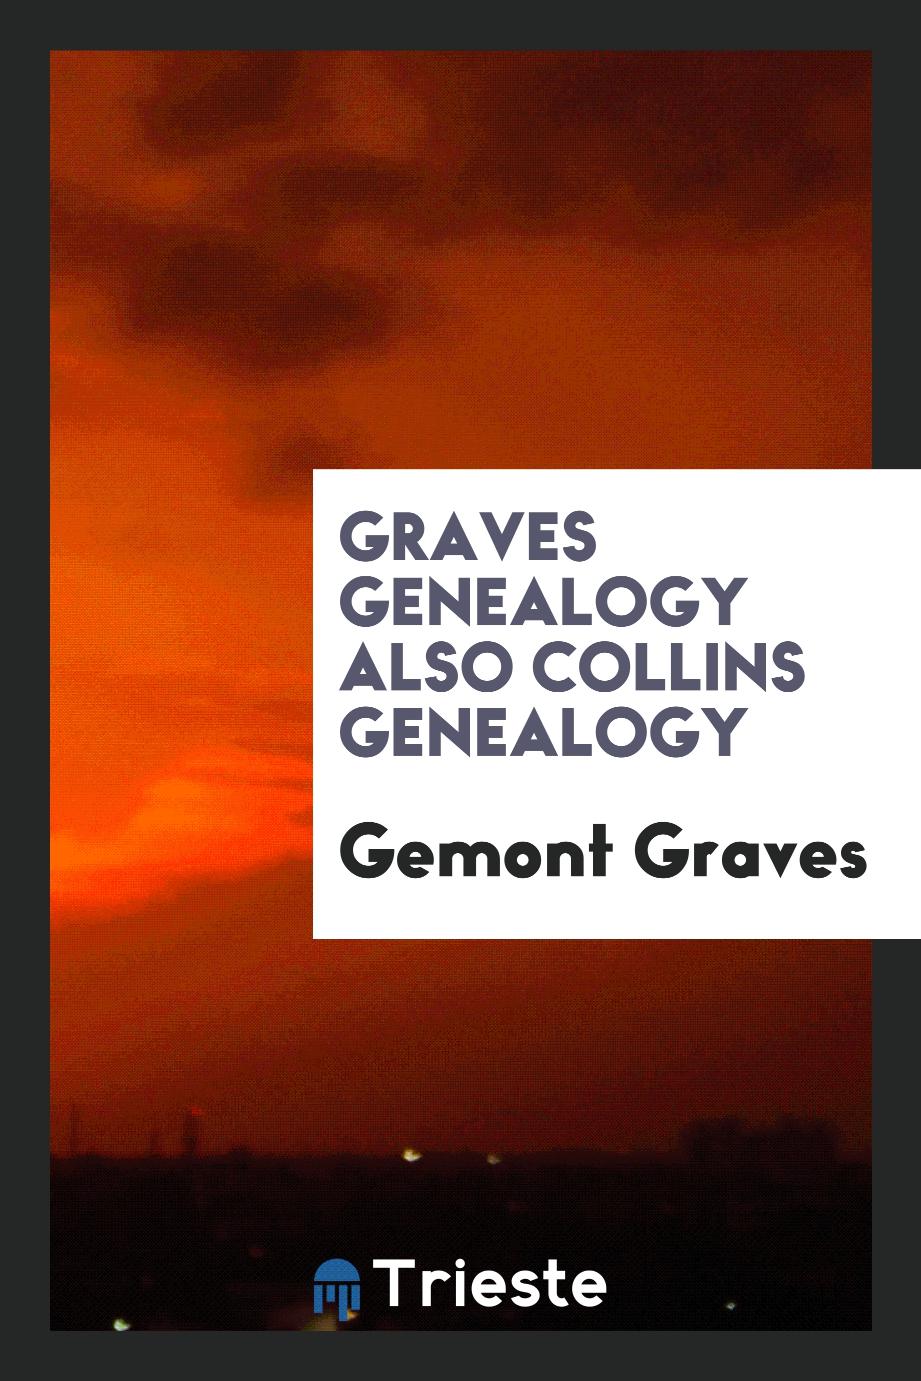 Graves Genealogy also collins genealogy